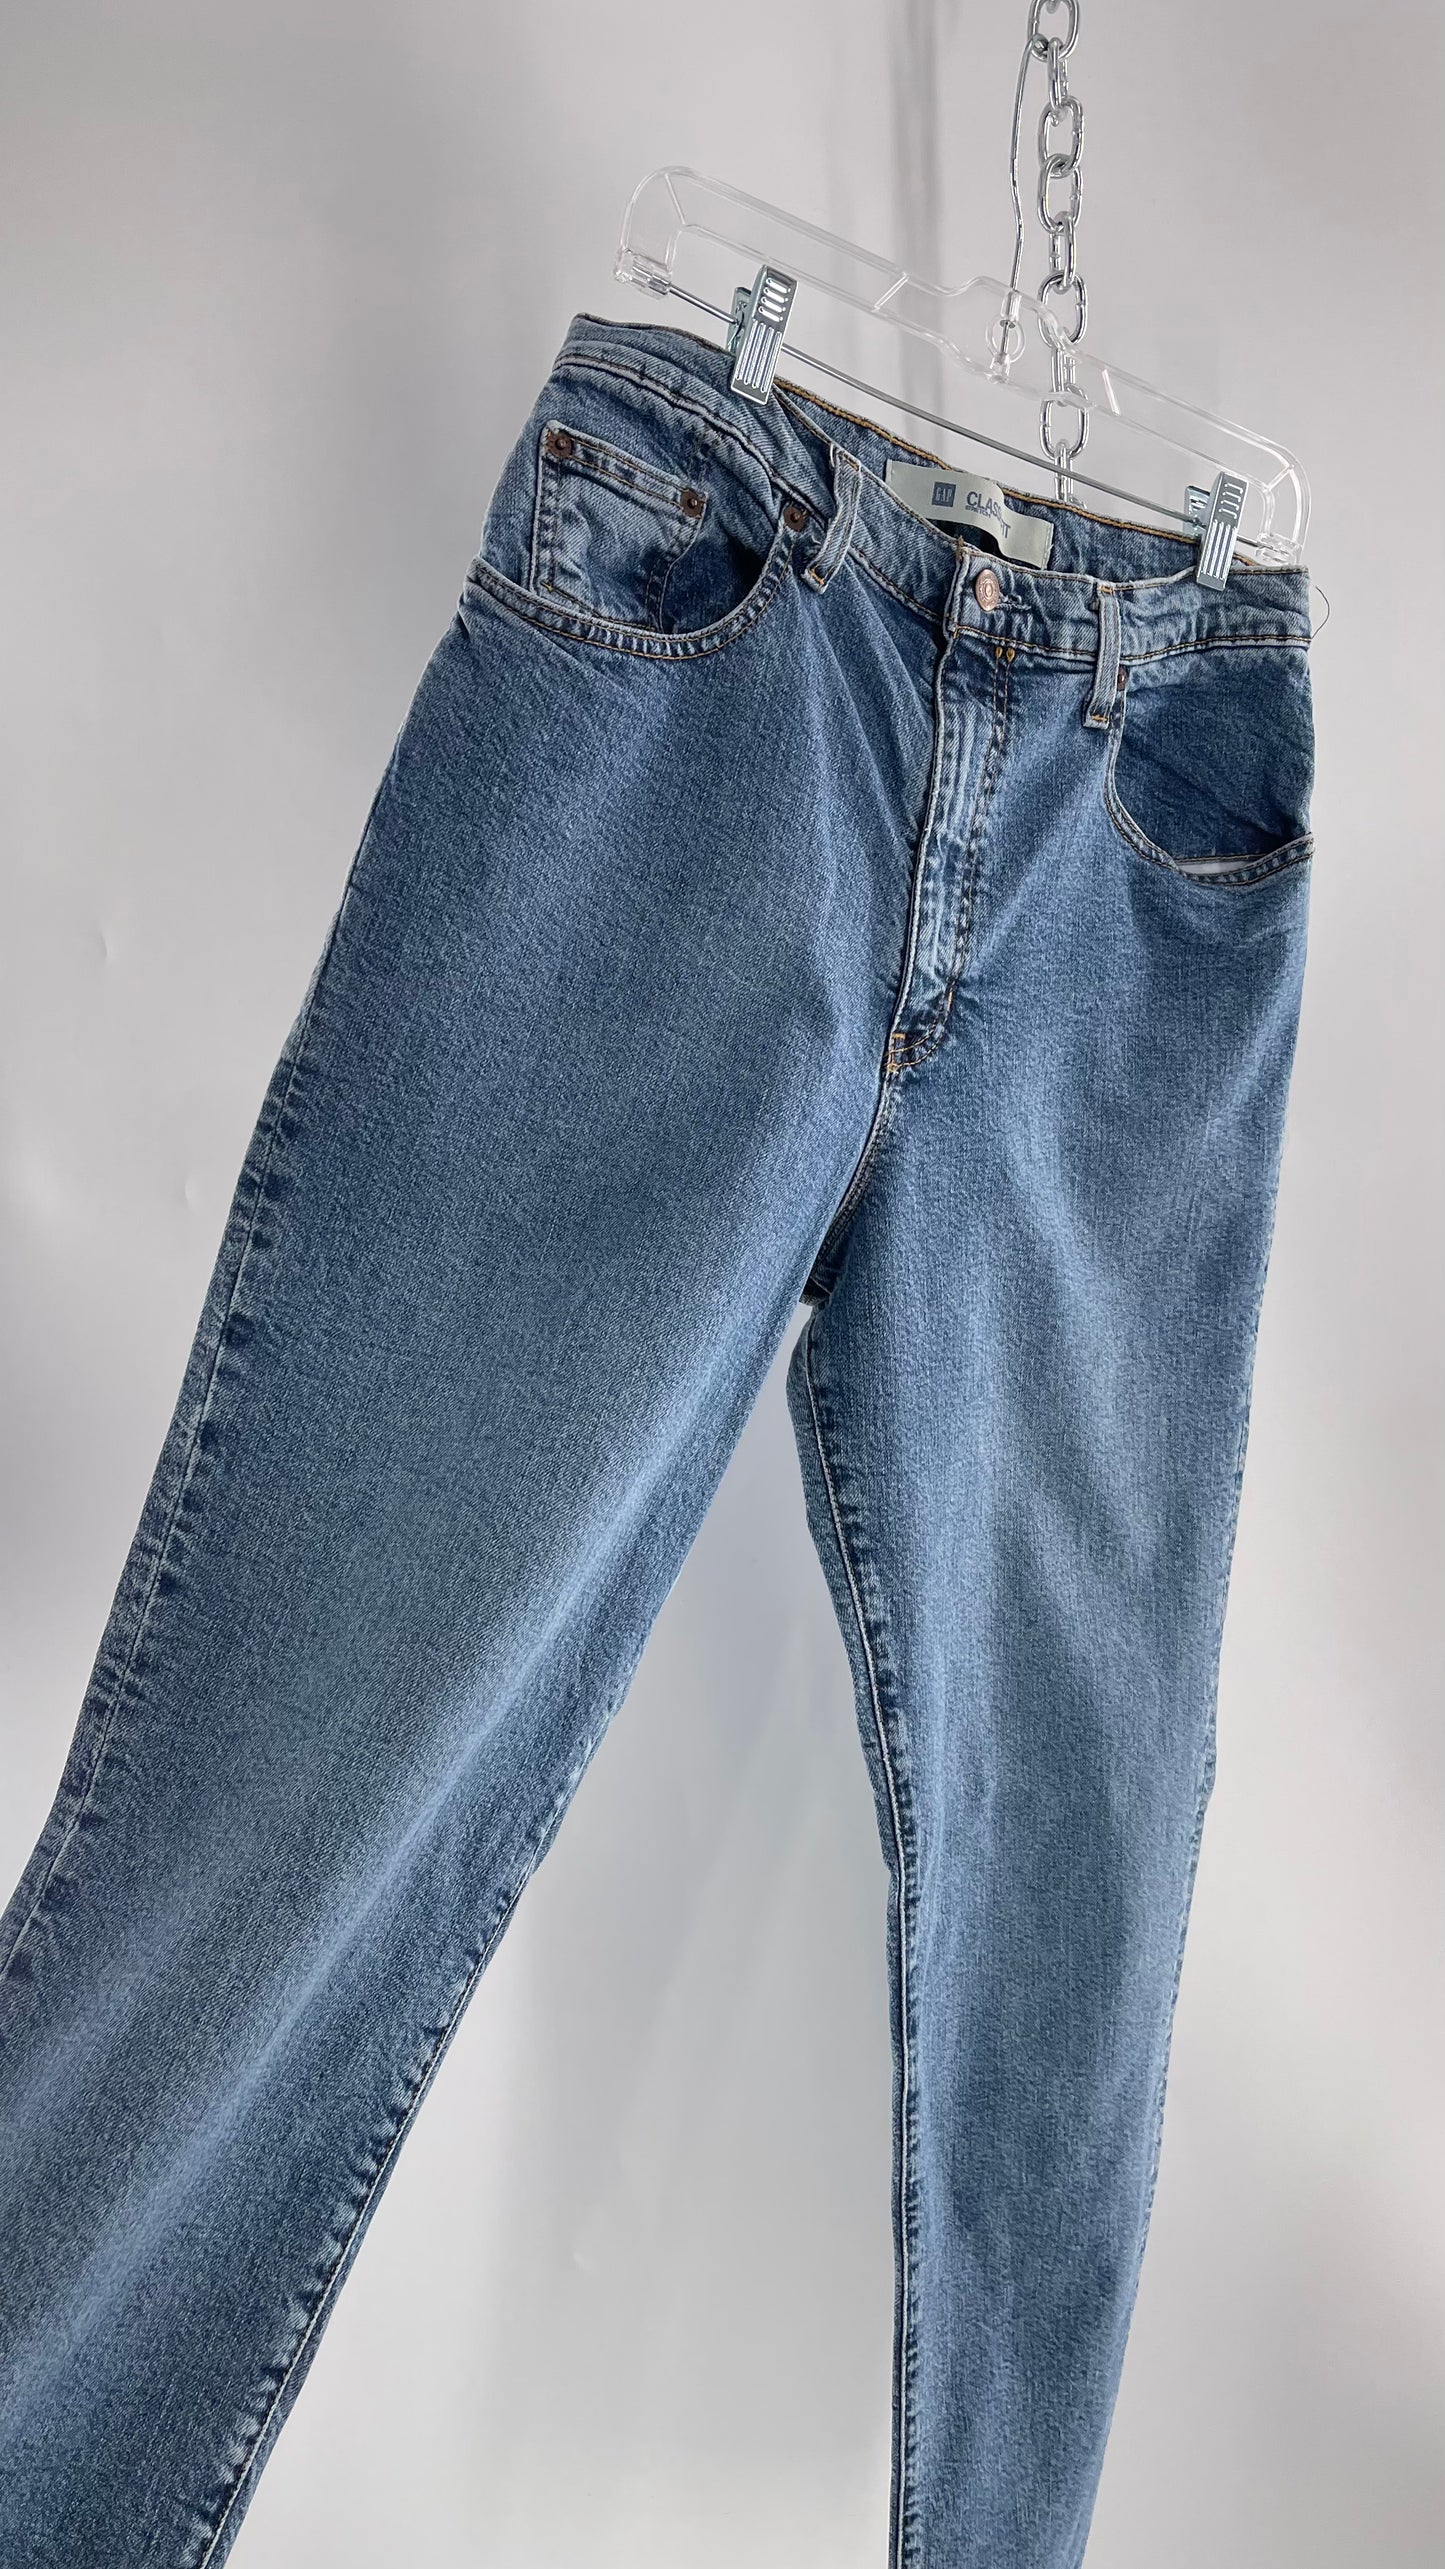 Gap Vintage HighWaist Light Wash Jeans (12)